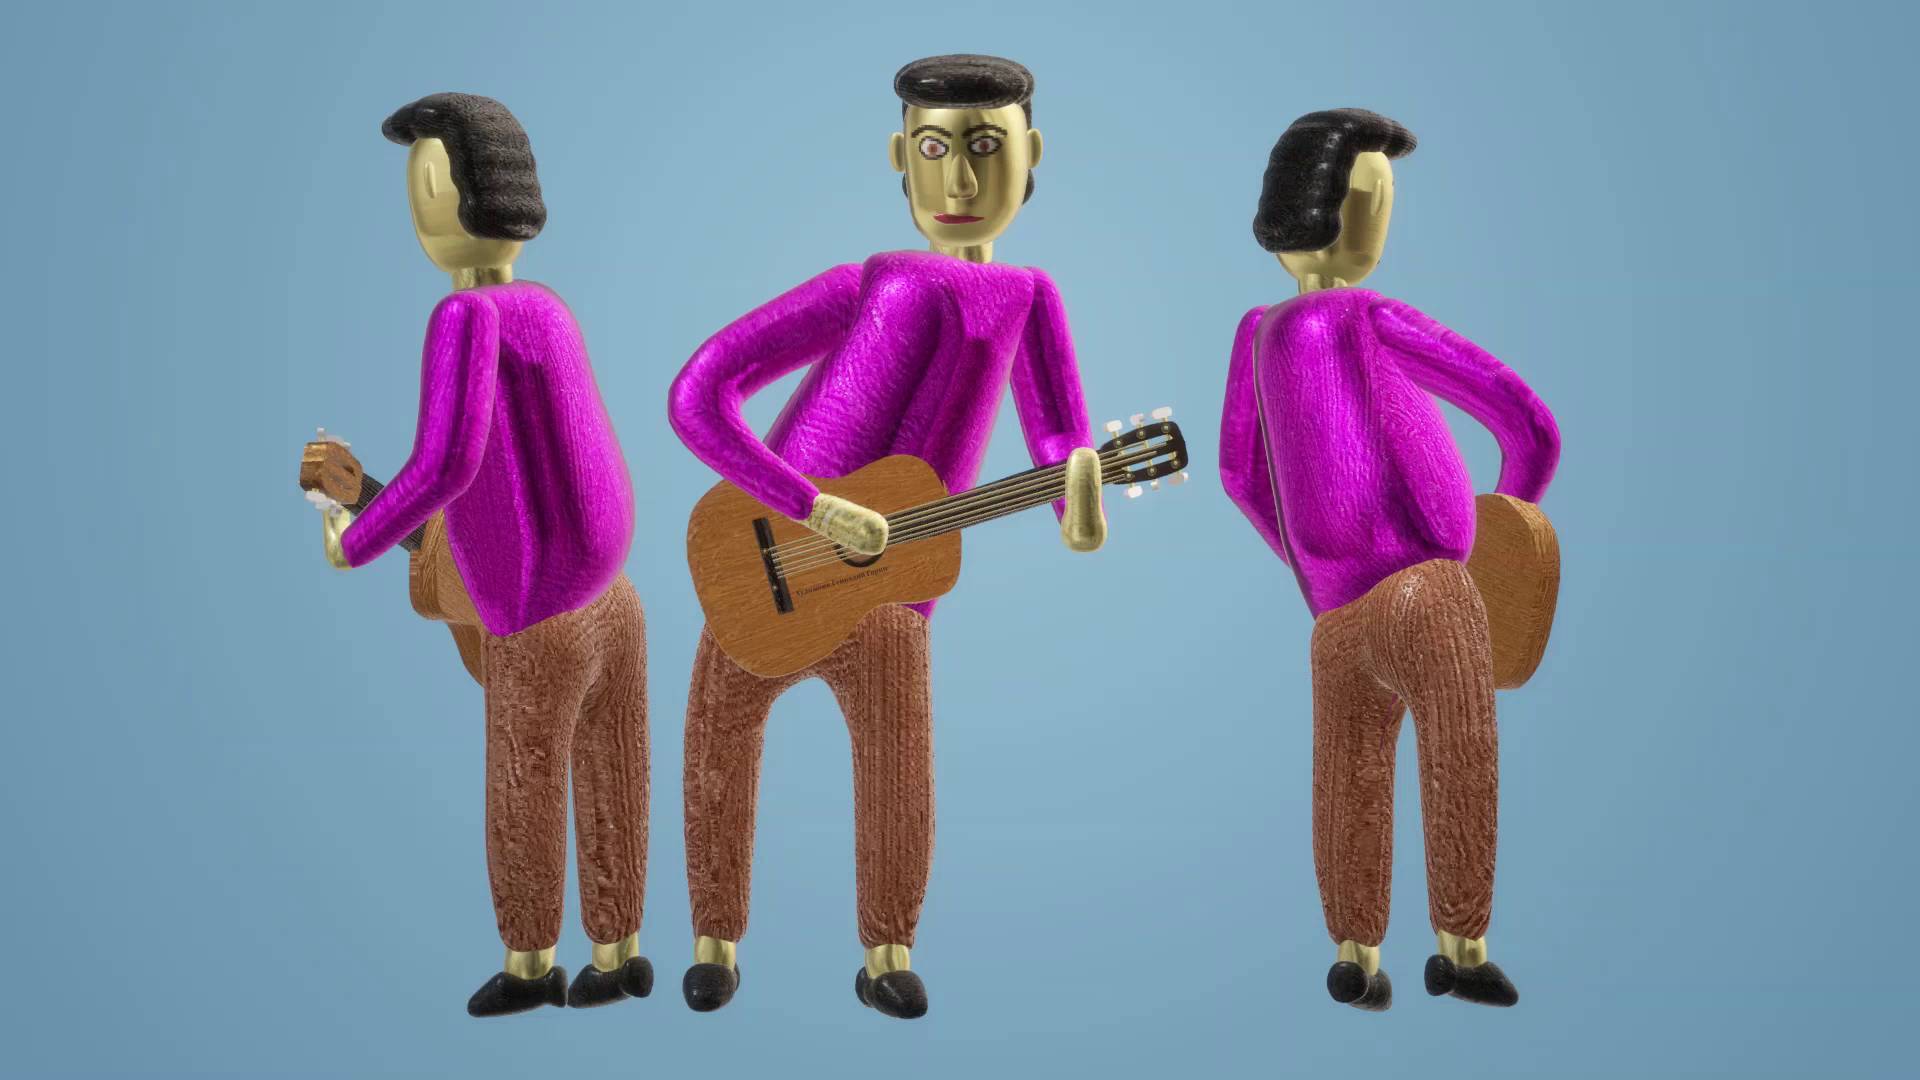 Рисунок 3D: Человечки с гитарами на голубом фоне